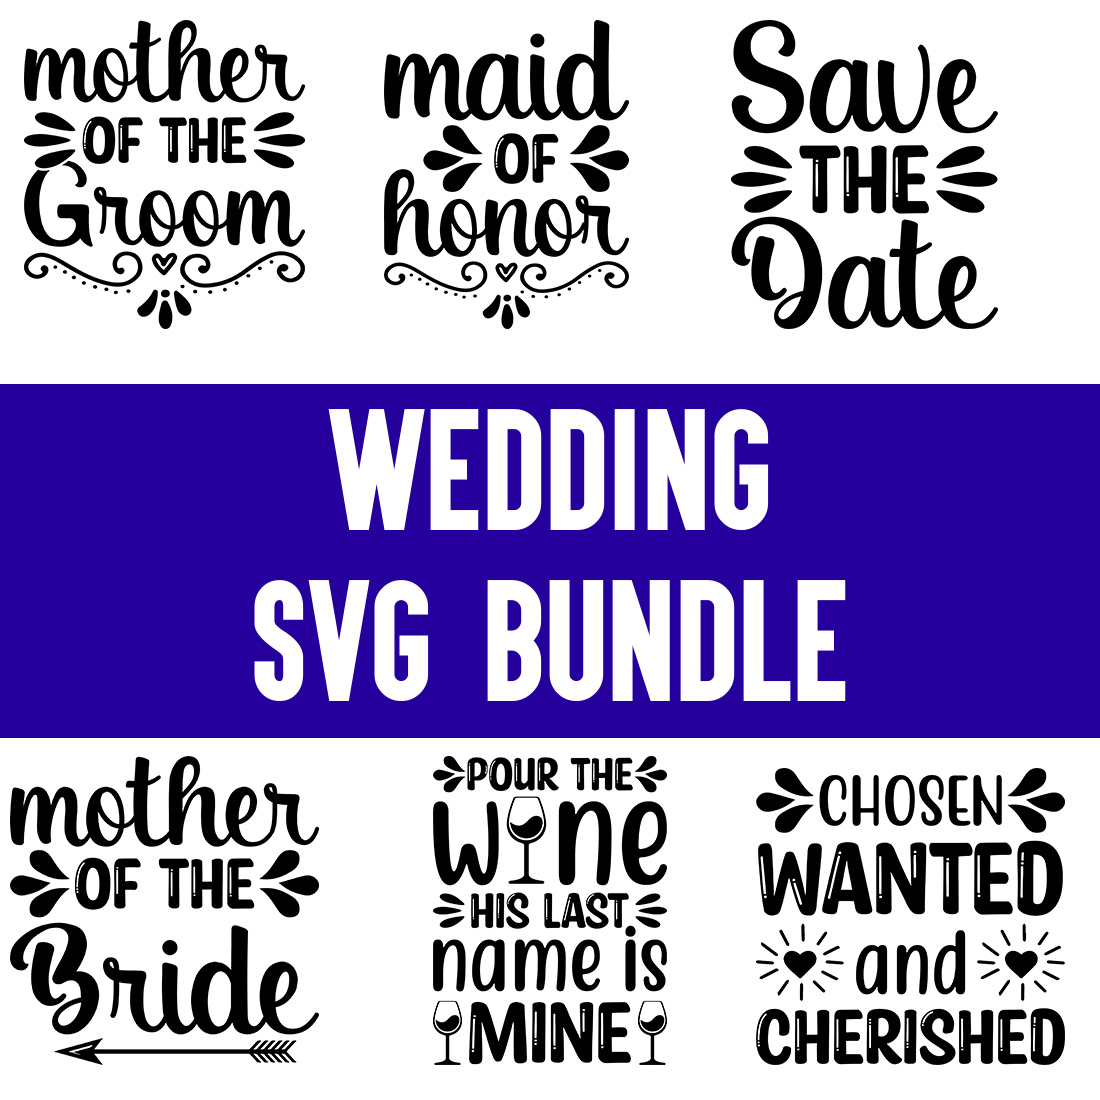 Wedding SVG Bundle preview image.